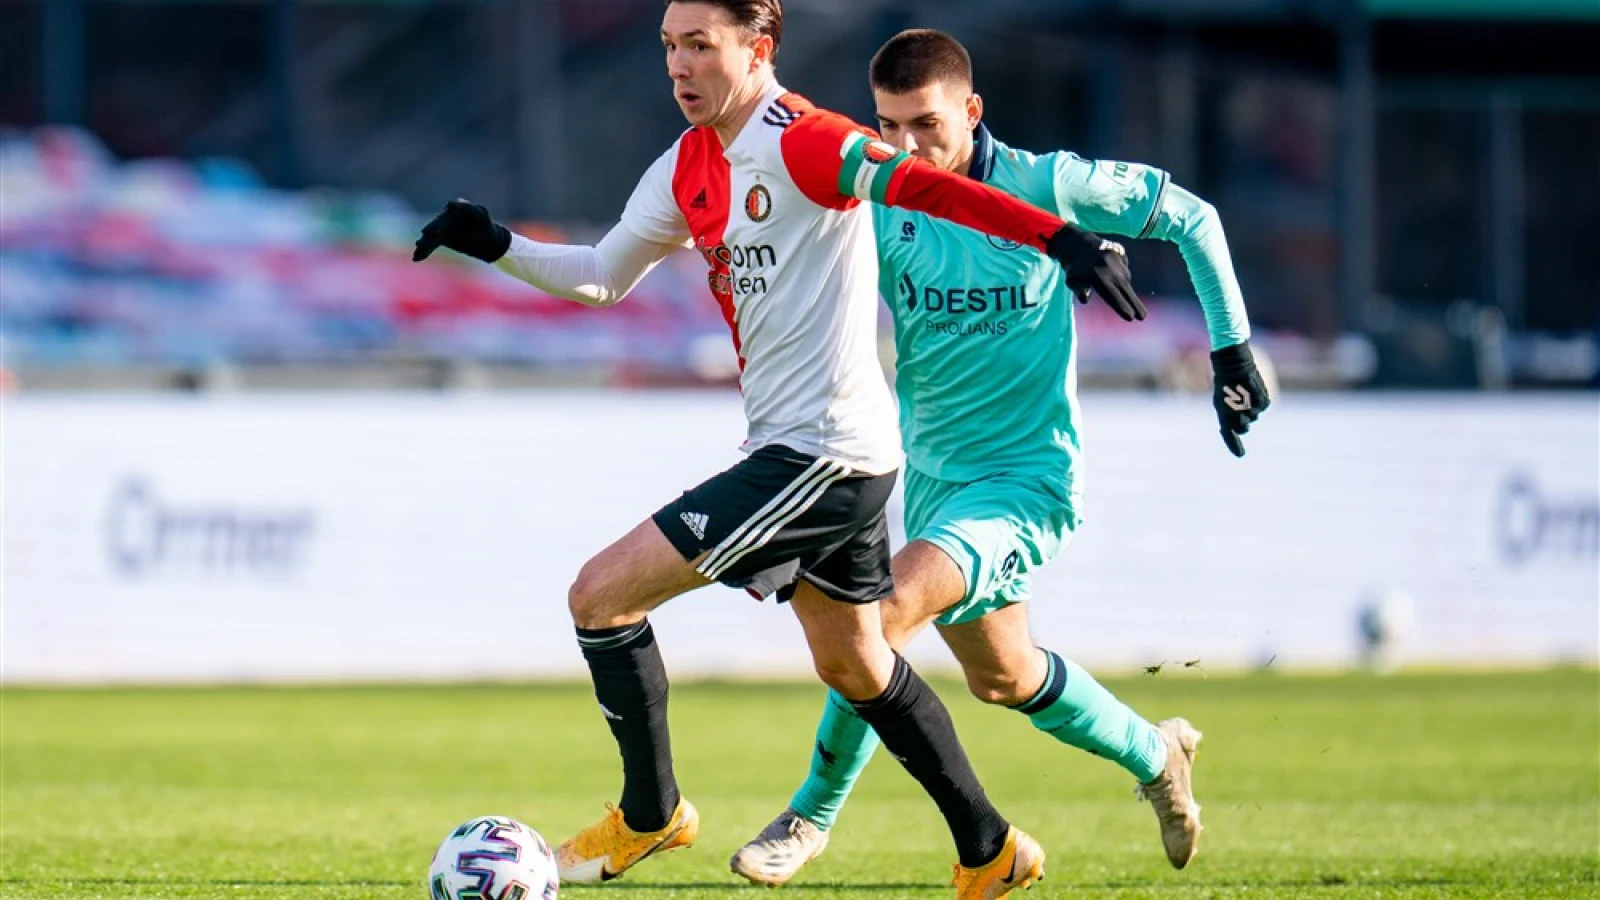 LIVE | Feyenoord - Willem II 5-0 | Einde wedstrijd